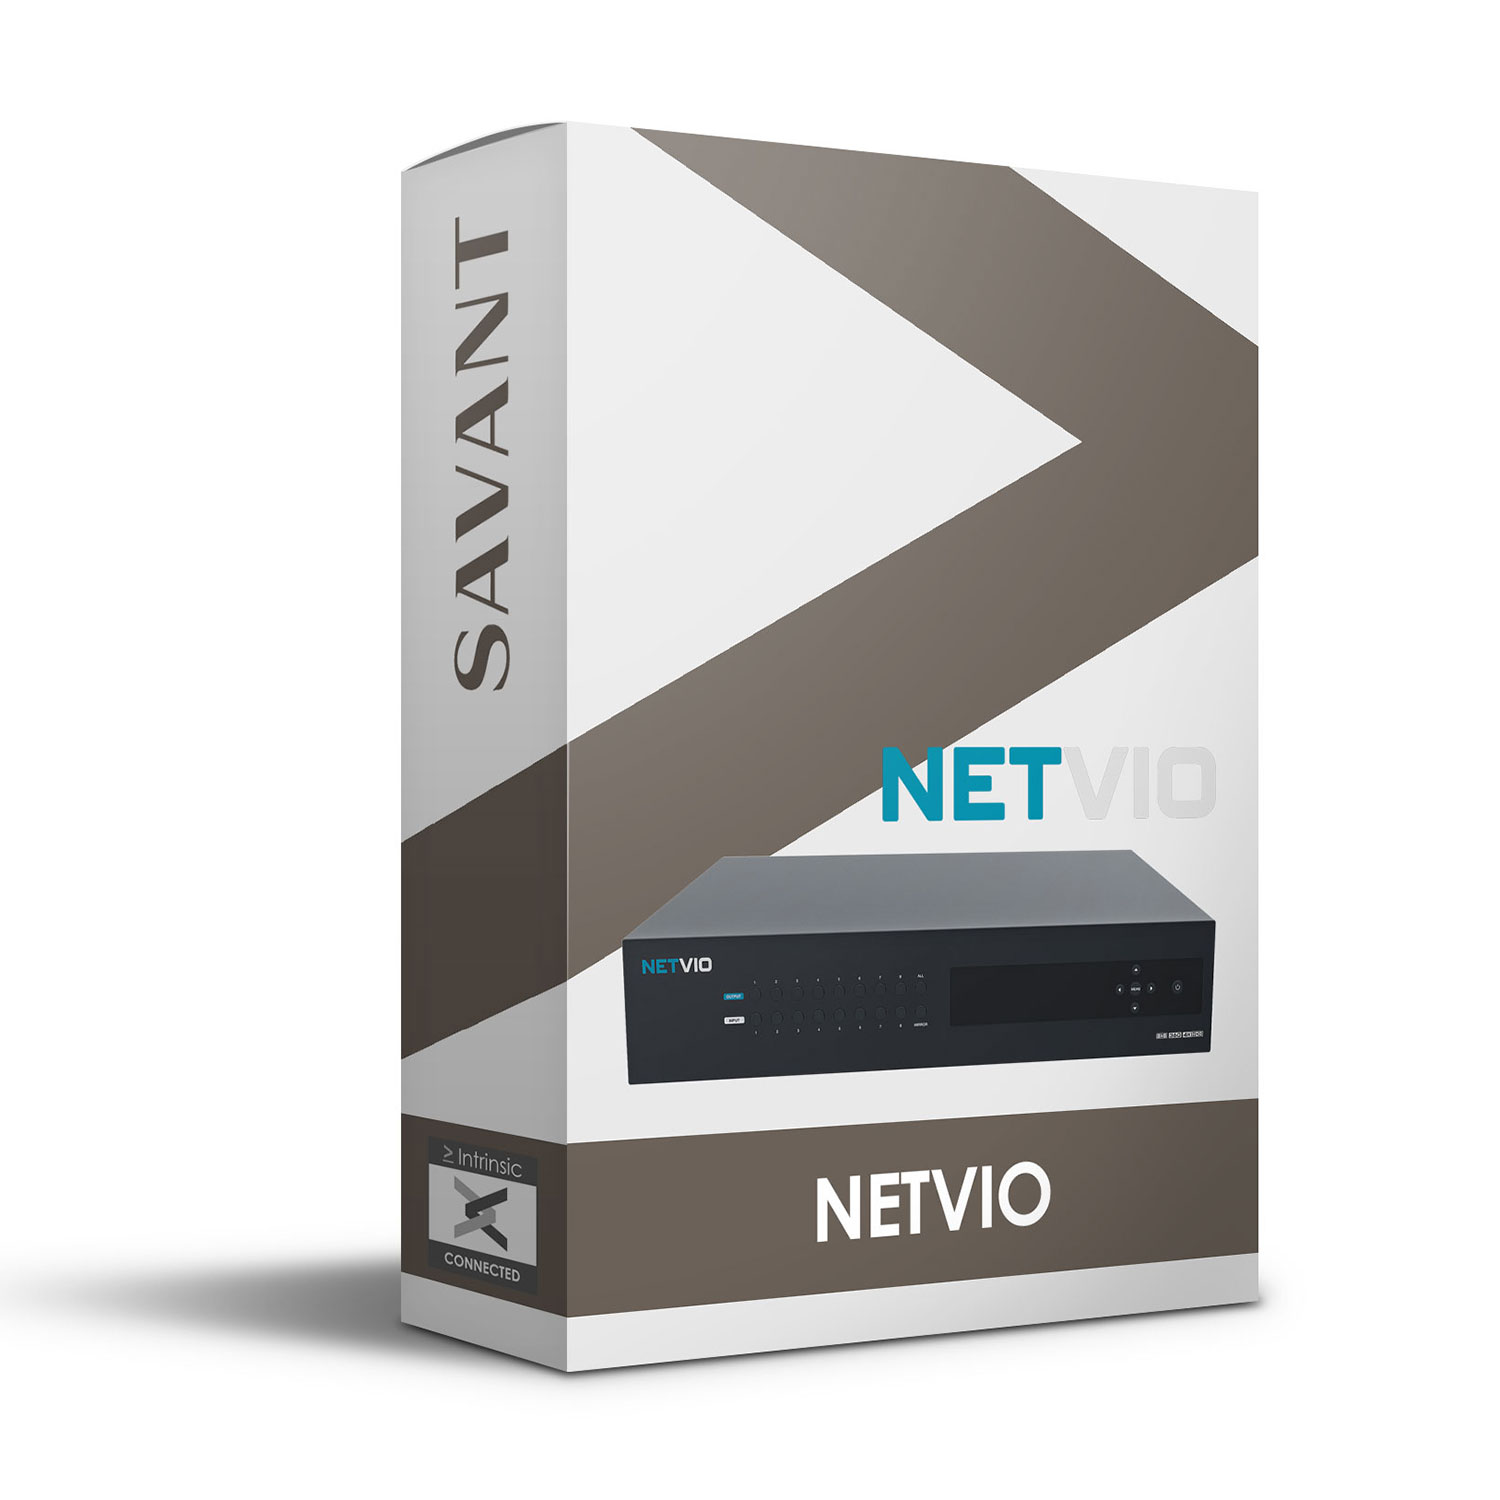 Netvio Profile for Savant